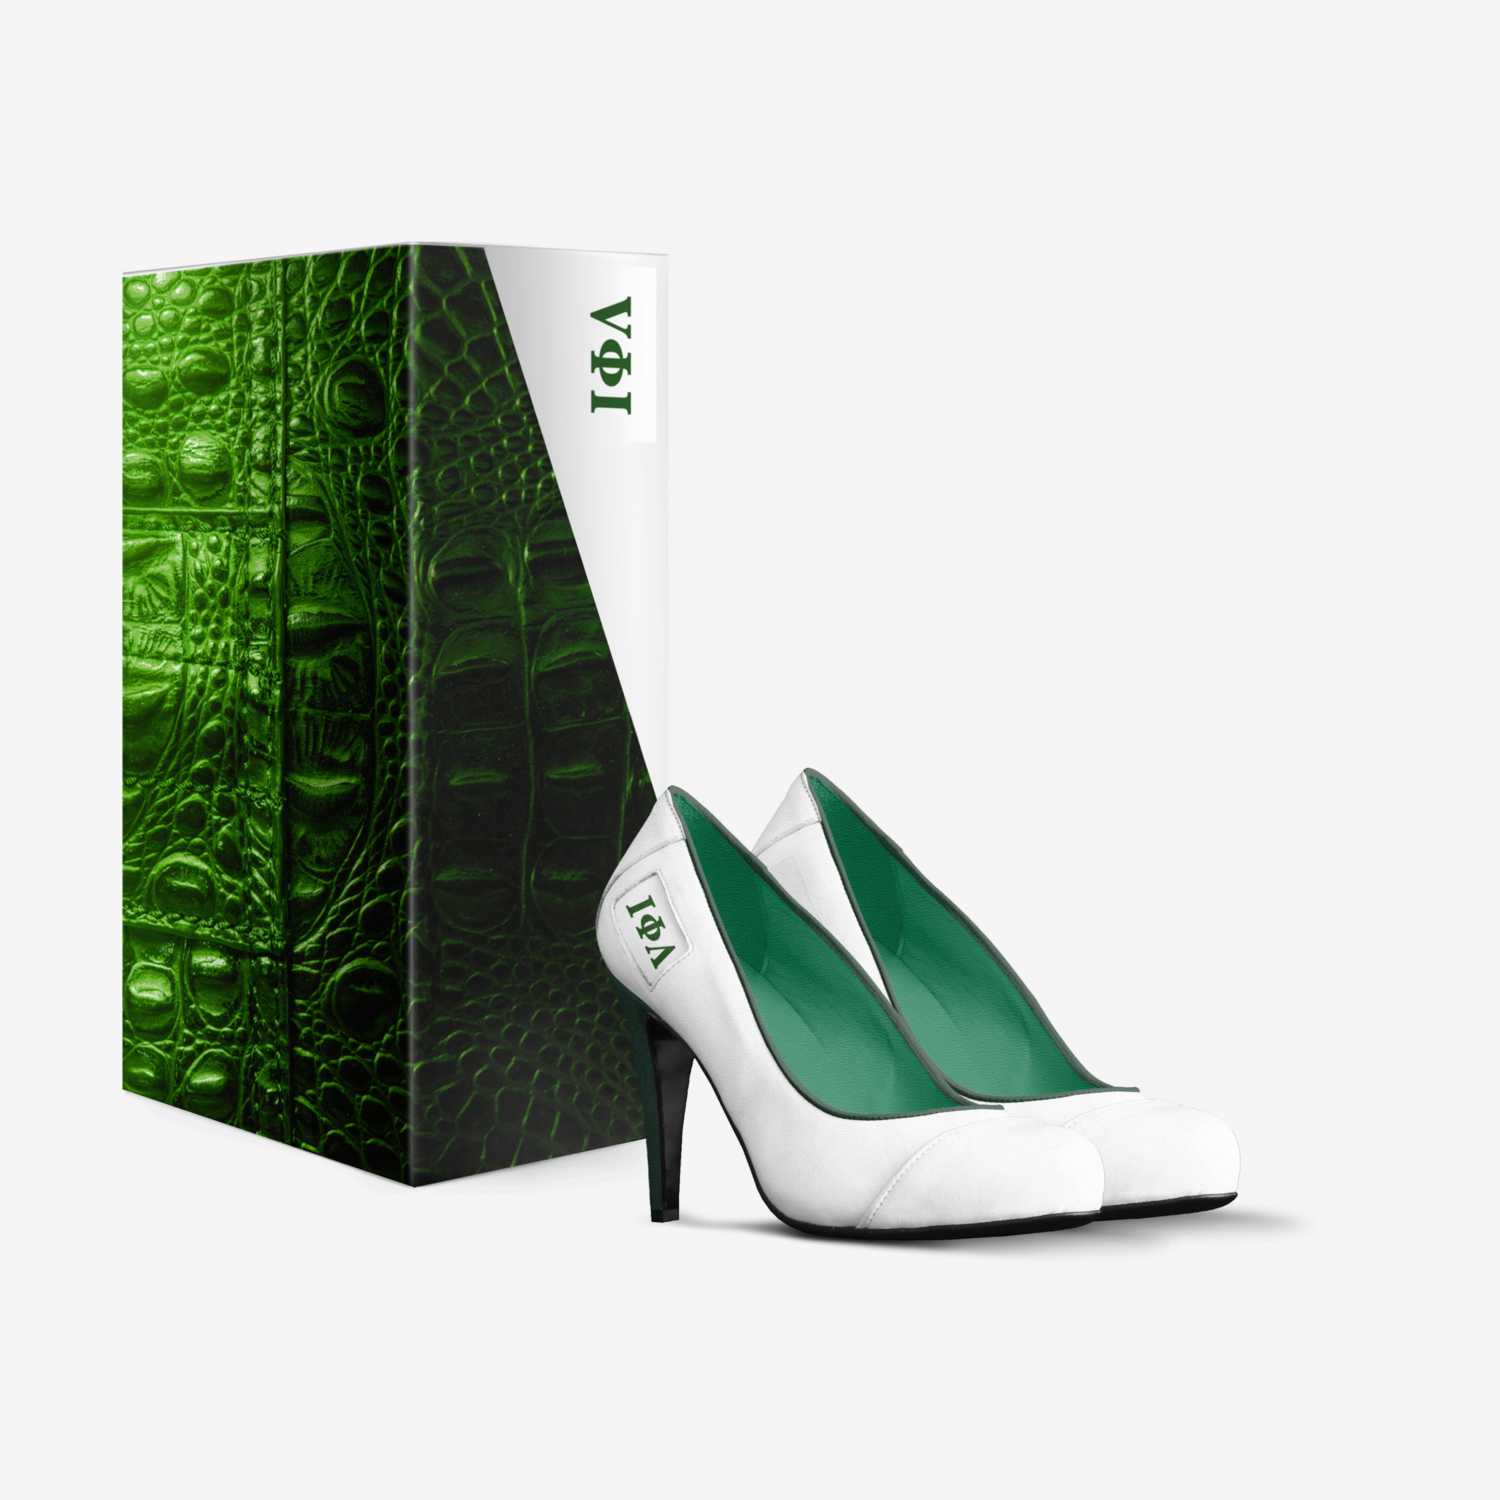 Iota Lady N6 custom made in Italy shoes by Chana Brooks | Box view